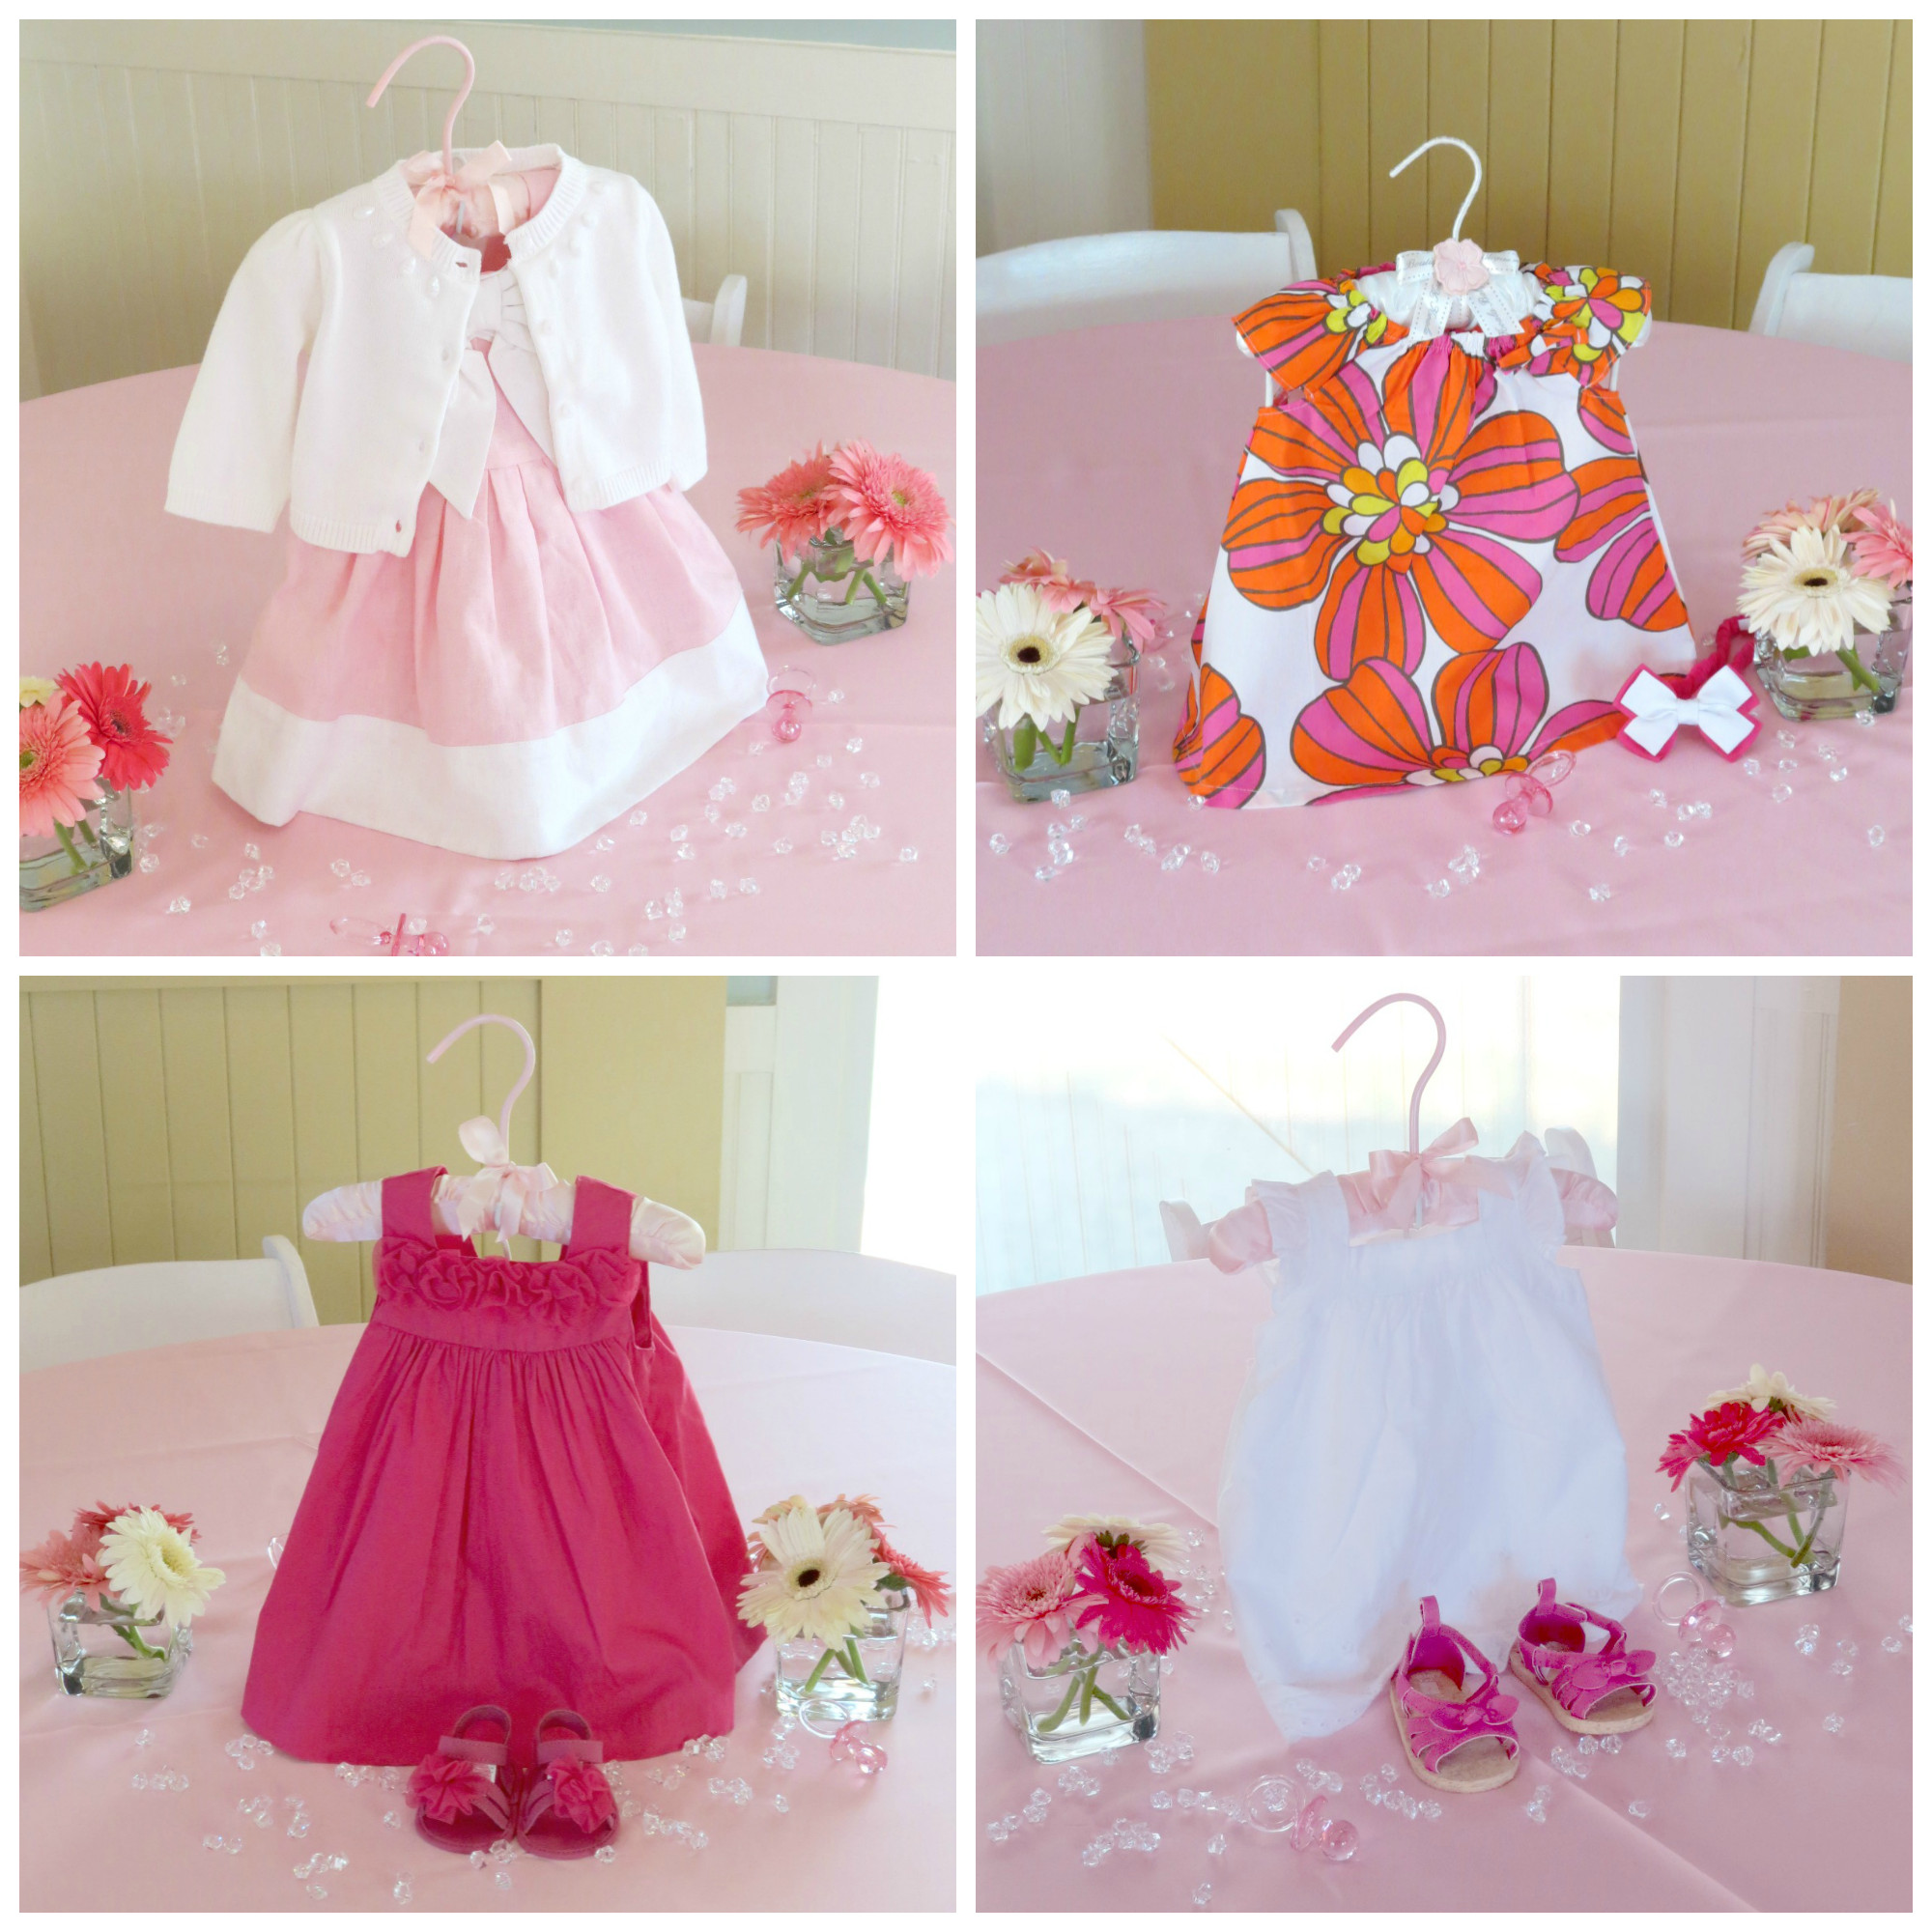 Diy Decor For Baby Shower
 DIY Baby Dress Centerpiece